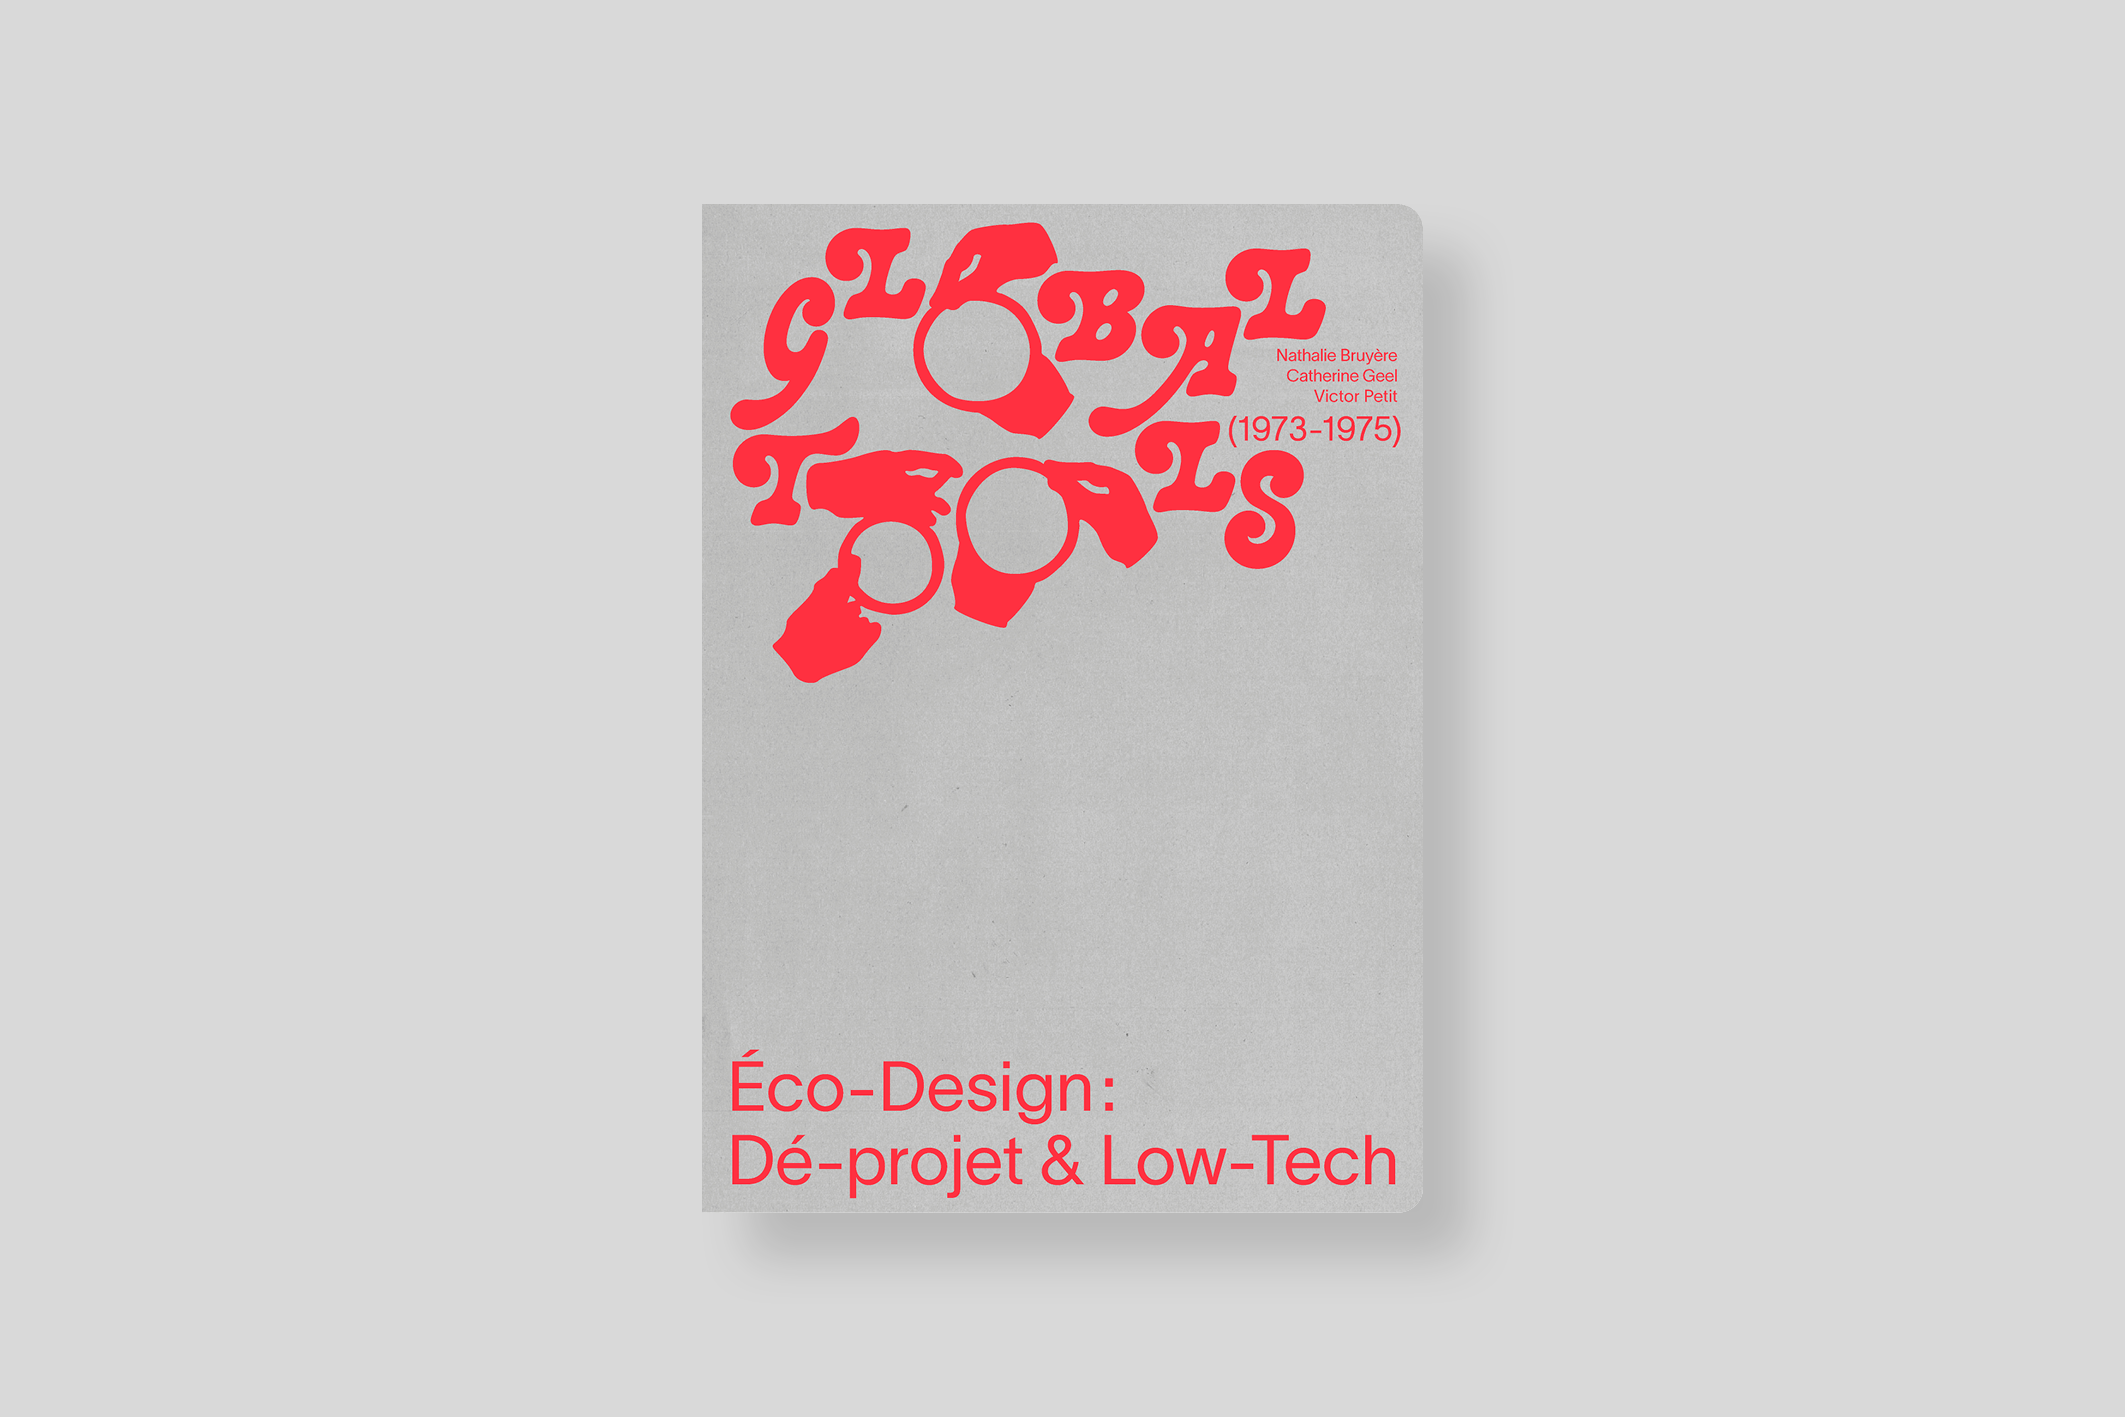 global-tools-1973-1975-eco-design-de-projet-&-low-tech-bruyere-isadT-cover